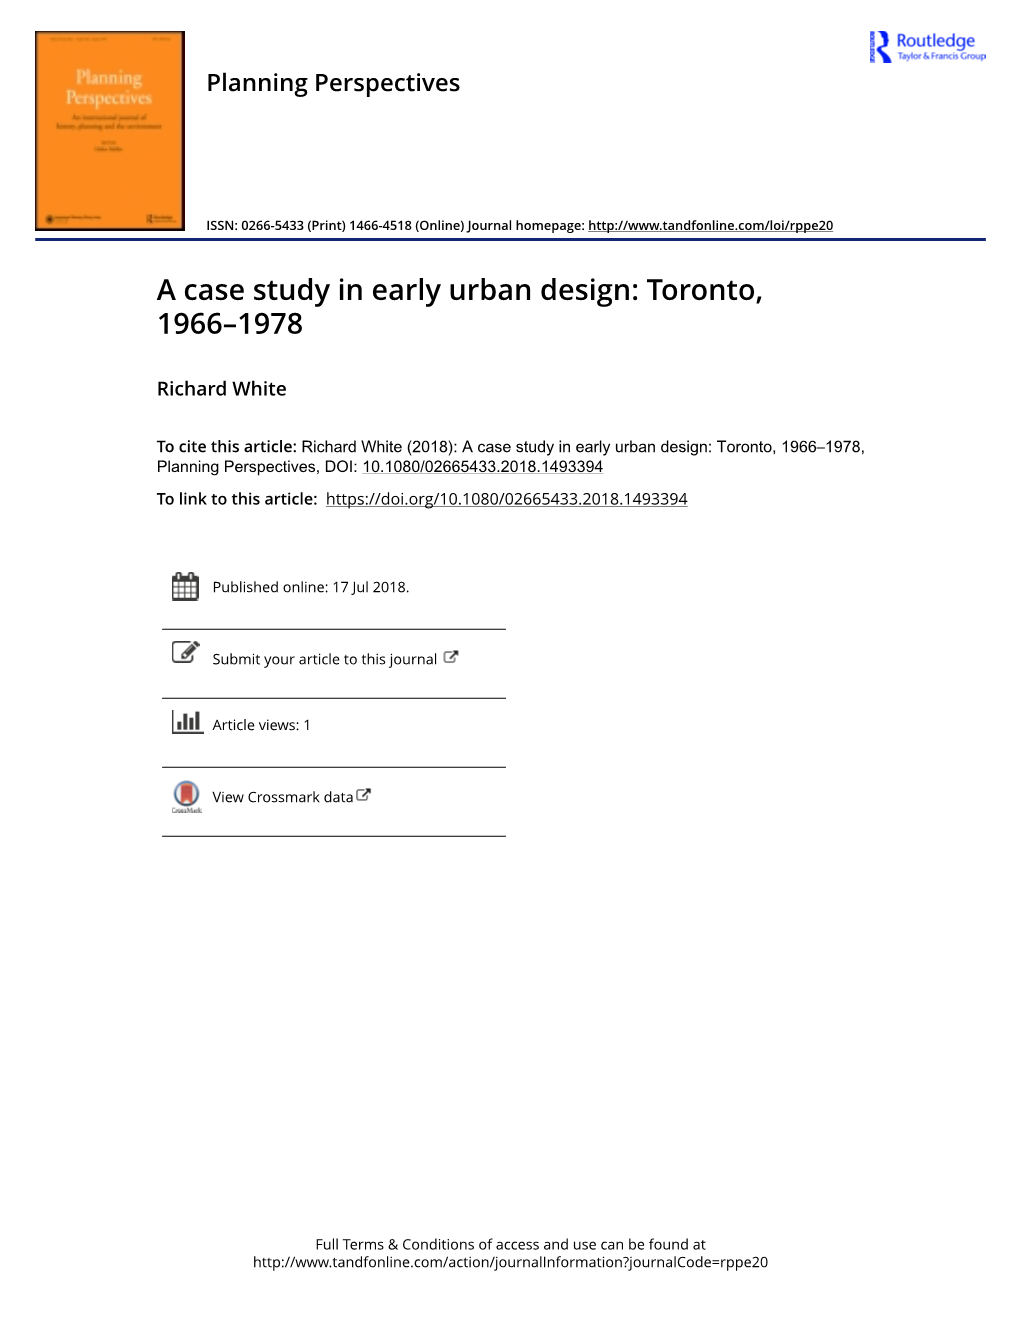 A Case Study in Early Urban Design: Toronto, 1966–1978